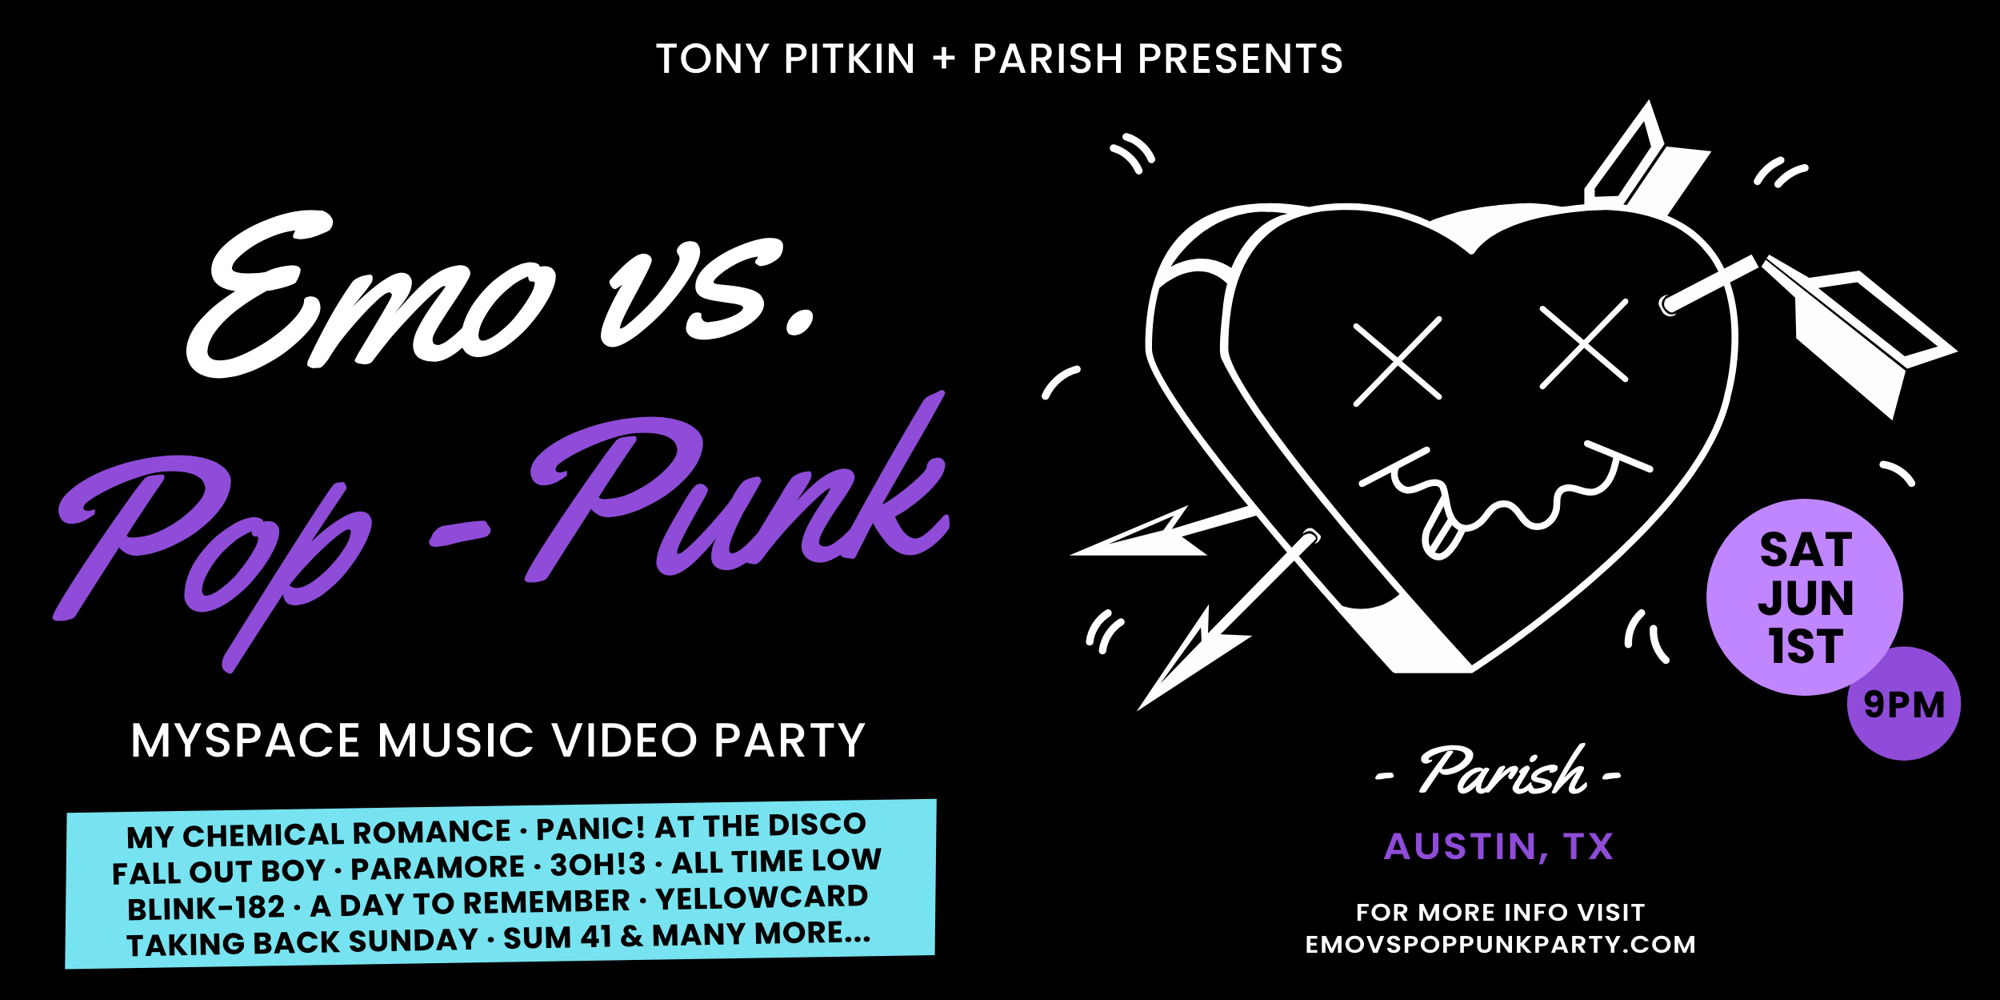 Tony Pitkin + Parish Present: Emo Vs Pop Punk - Myspace Music Video Party promotional image